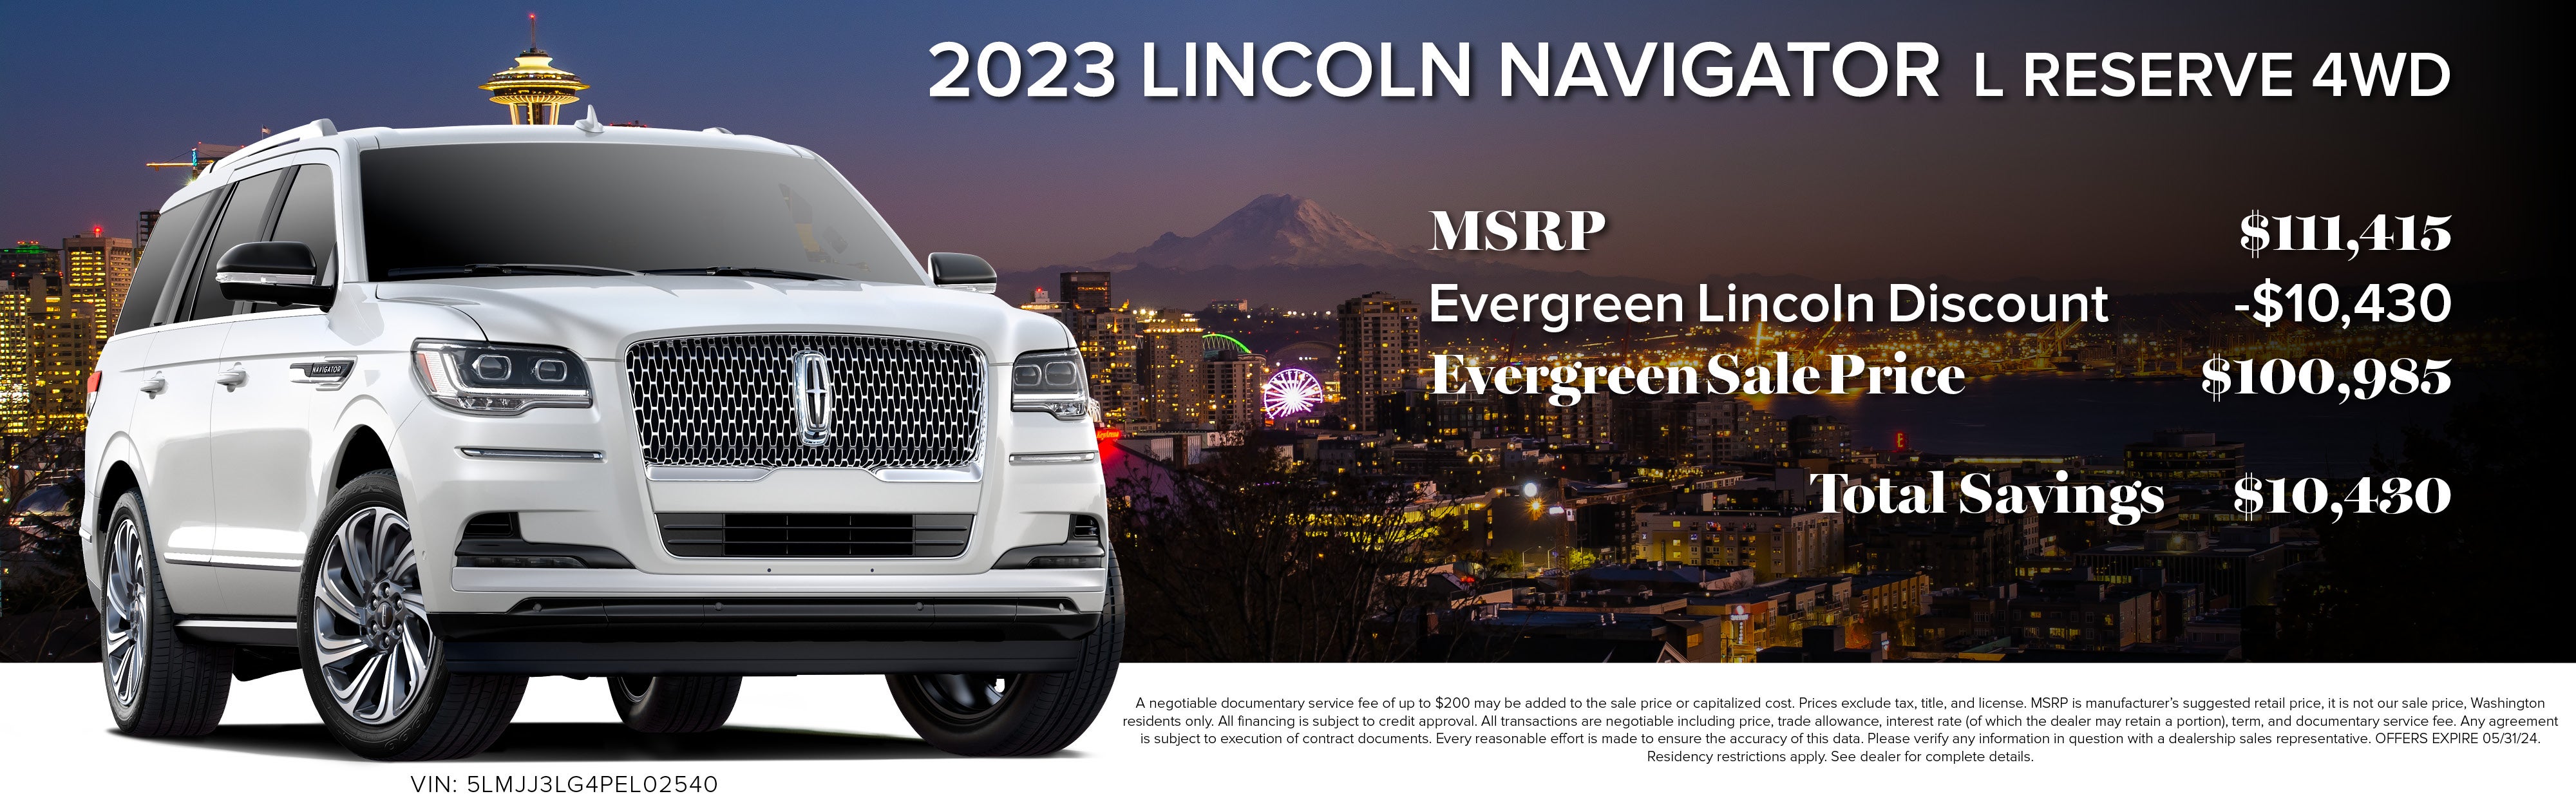 2023 Lincoln Navigator L Reserve 4WD